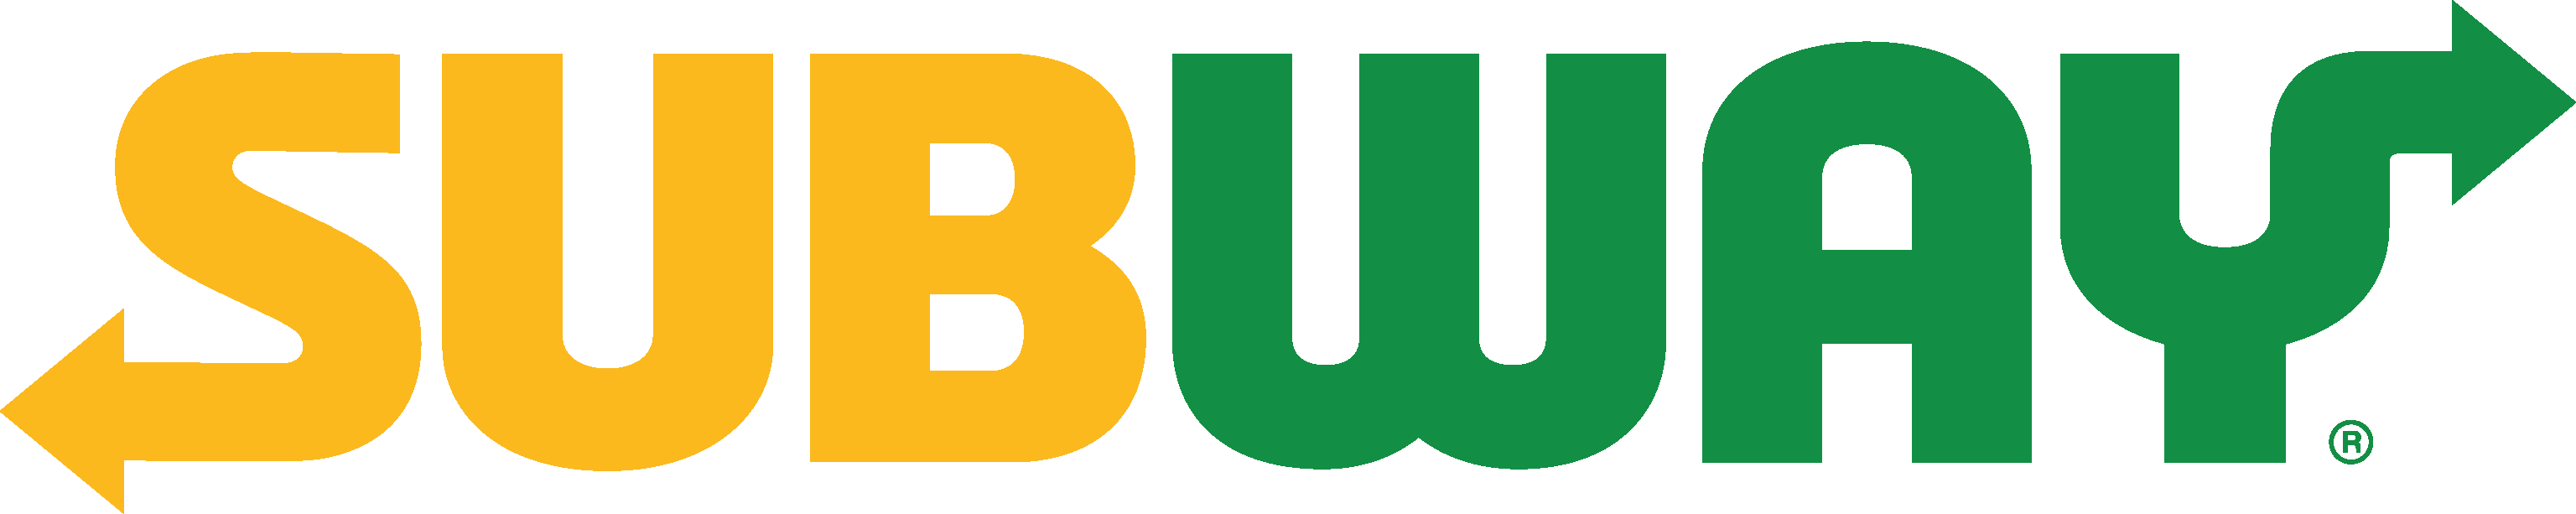 Subway Logo - Subway Logo Png (3072x613)